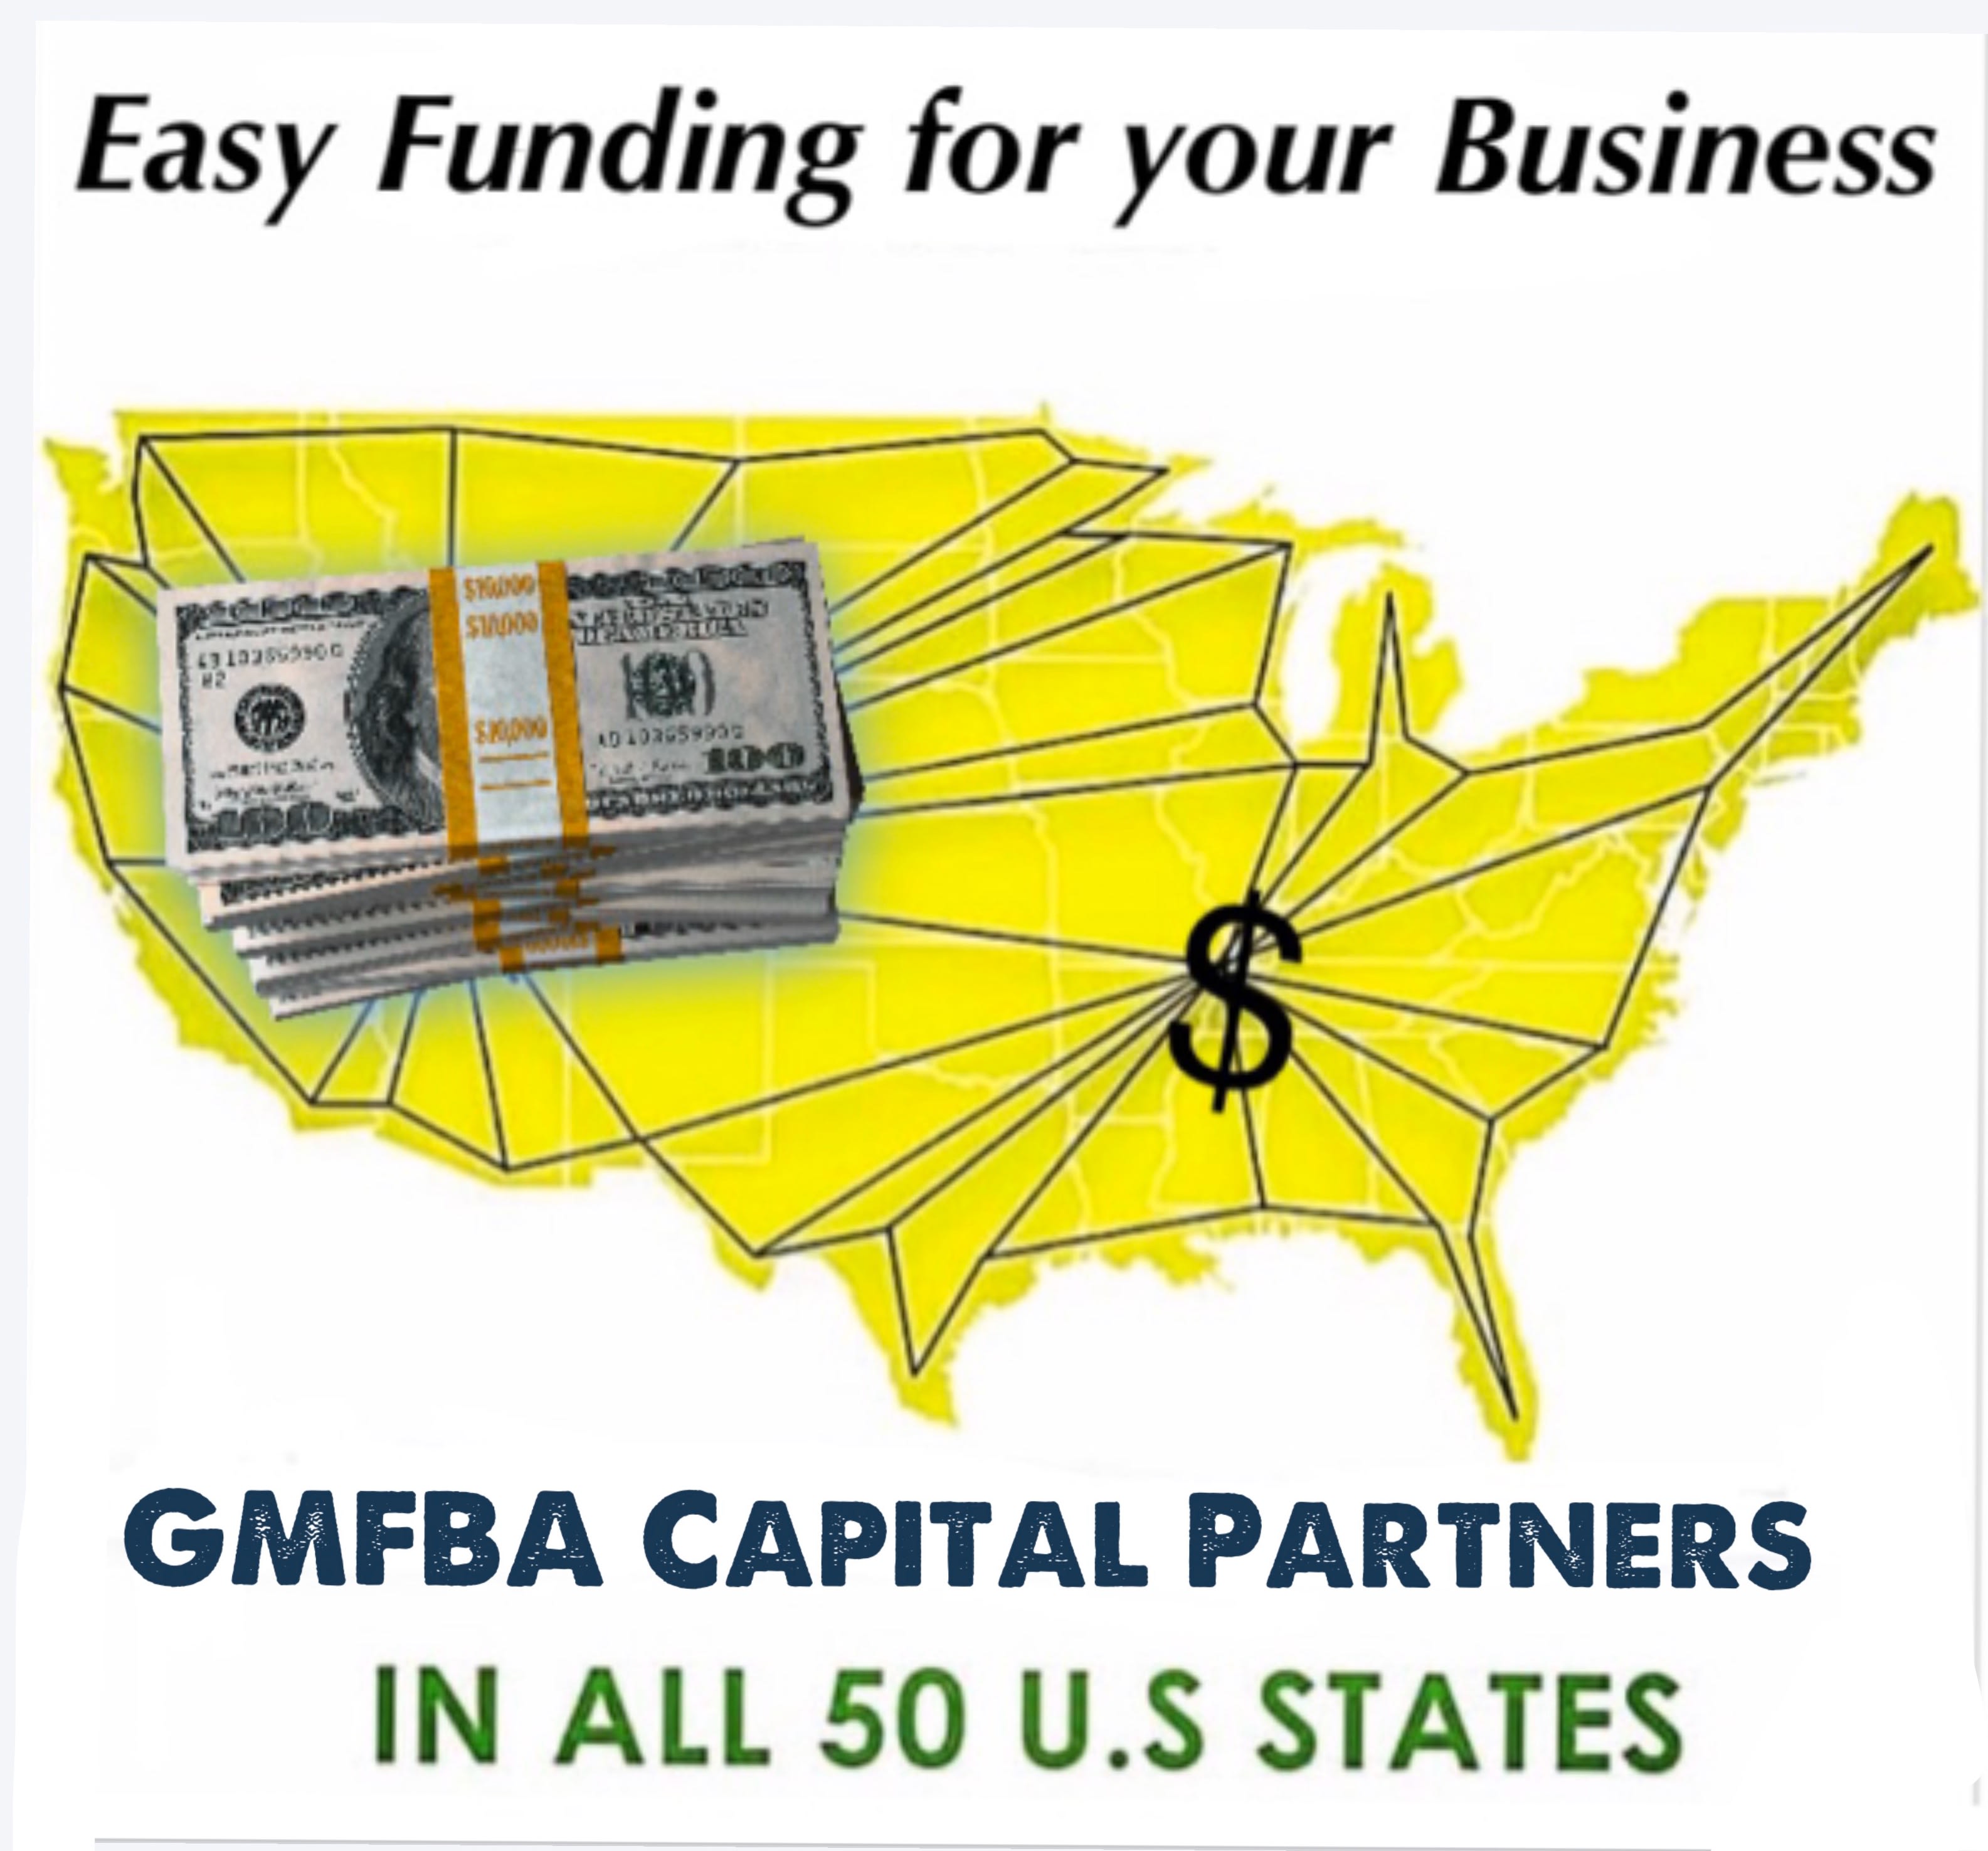 GMFBA Capital Partners